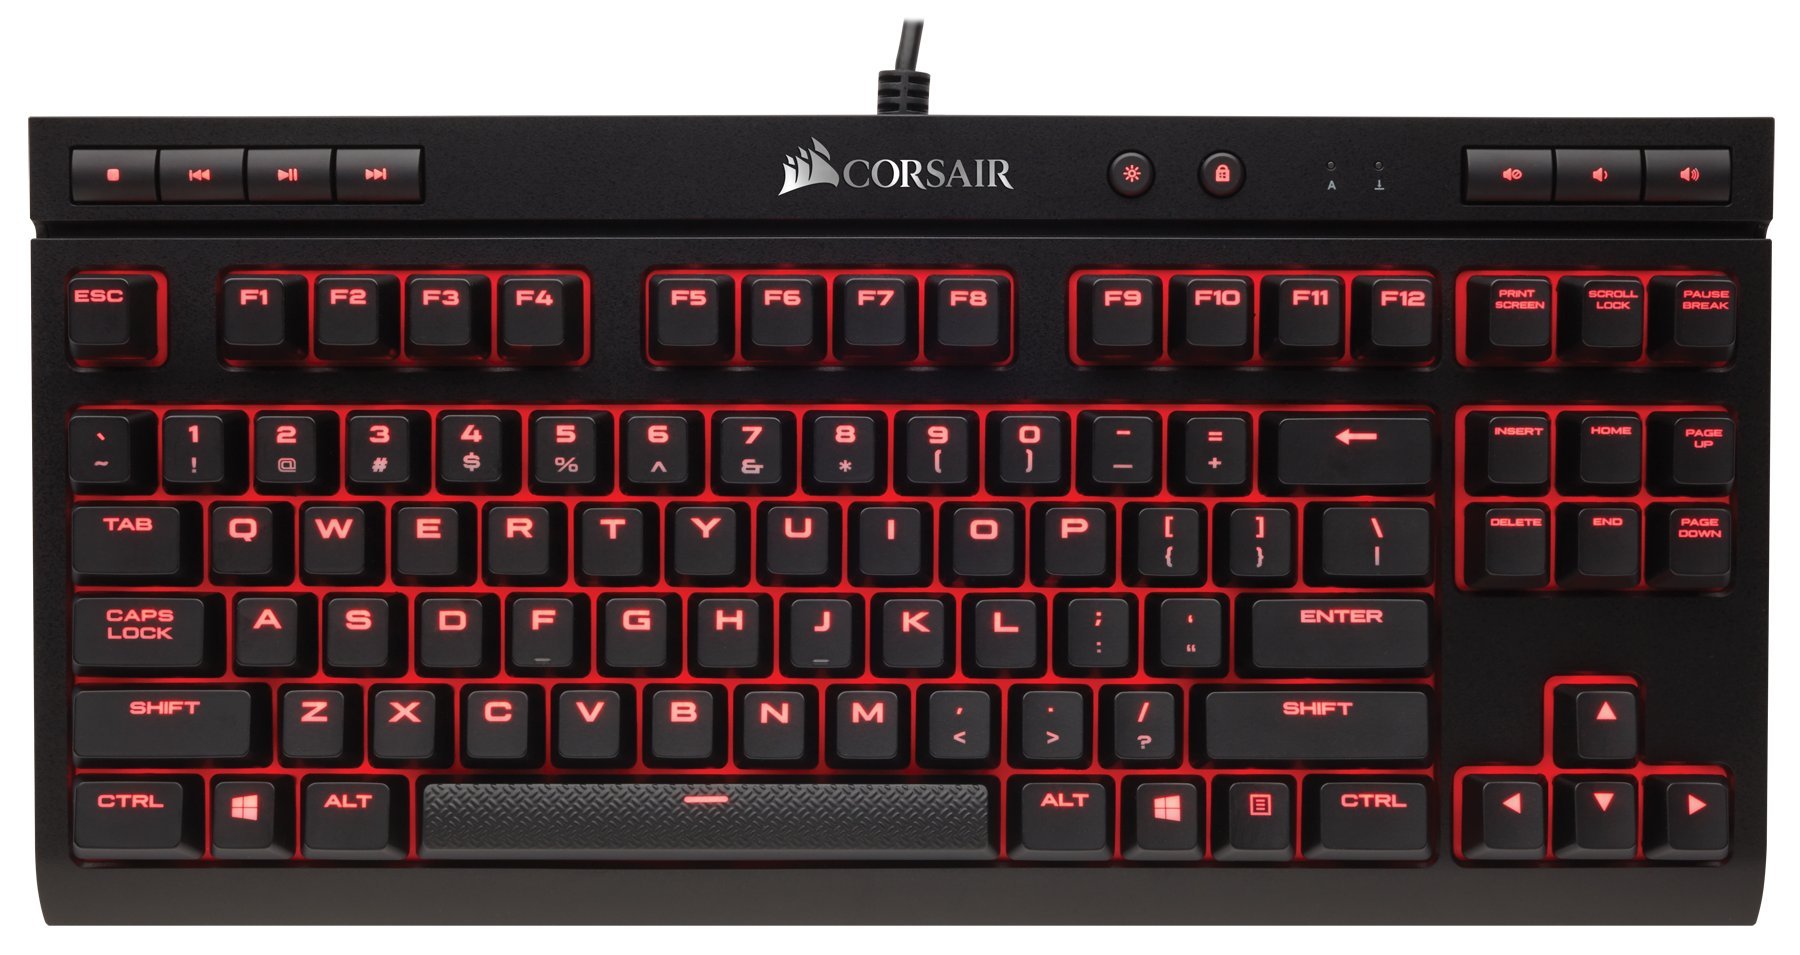 CORSAIR Corsair USB-A K63 Red LED -日本語キーボード- [Cherry MX Redキースイッチ採用 コンパクト テンキーレスゲーミングキーボード] KB395 CH-9115020-JP